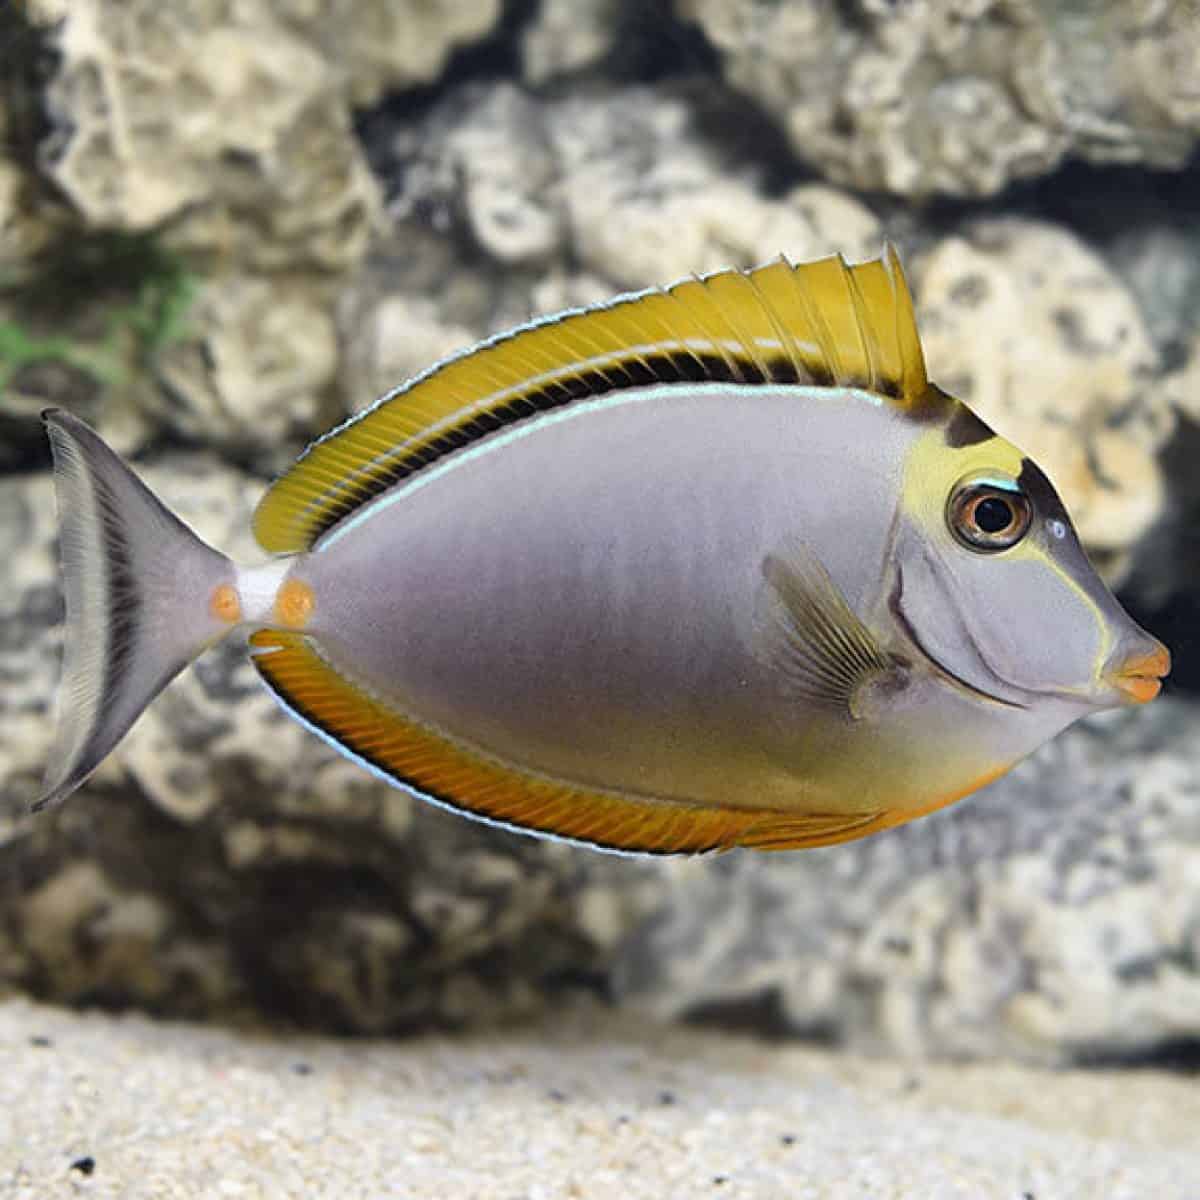 Naso Tang: Saltwater Aquarium Fish for Marine Aquariums